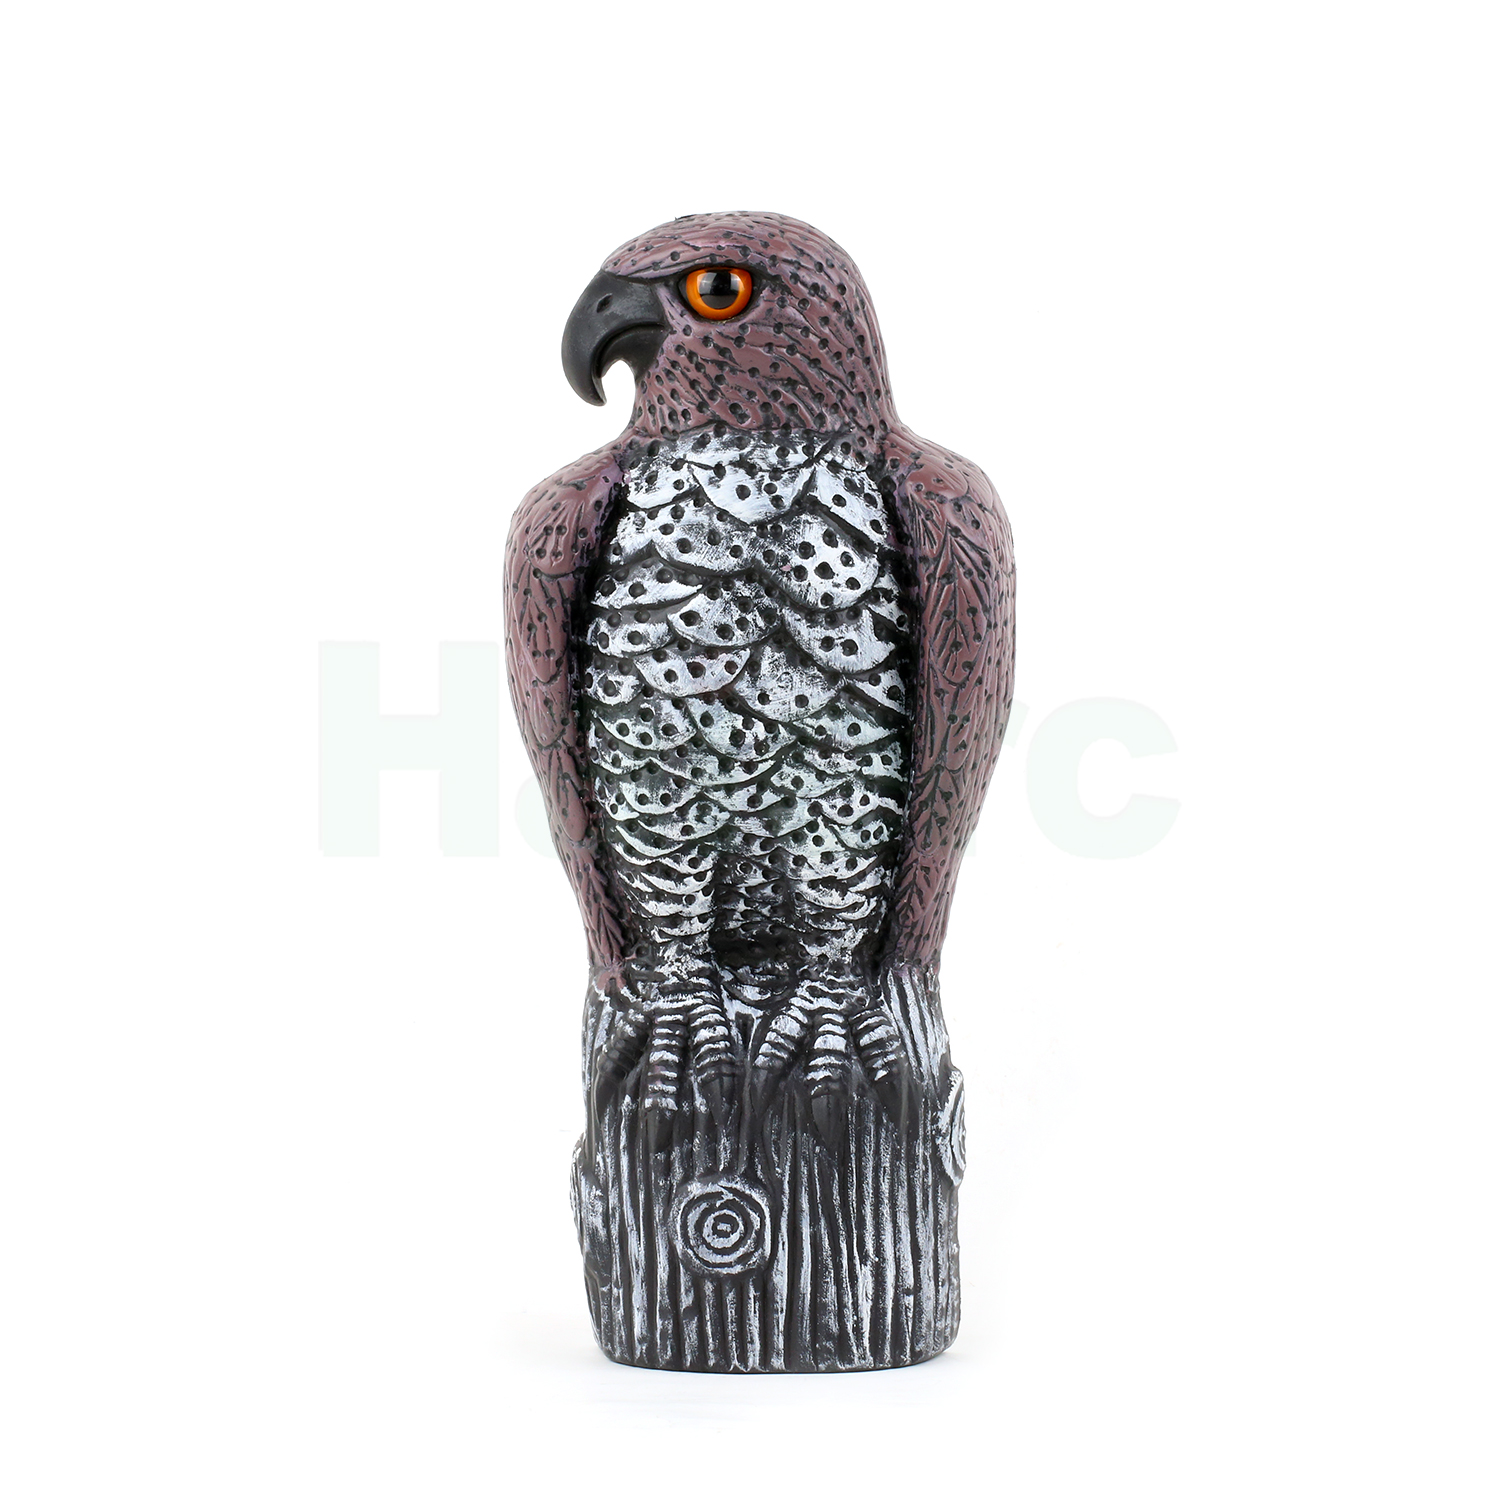 Haierc outdoor pest bird control plastic garden ornaments garden bird scarer owl HC1640